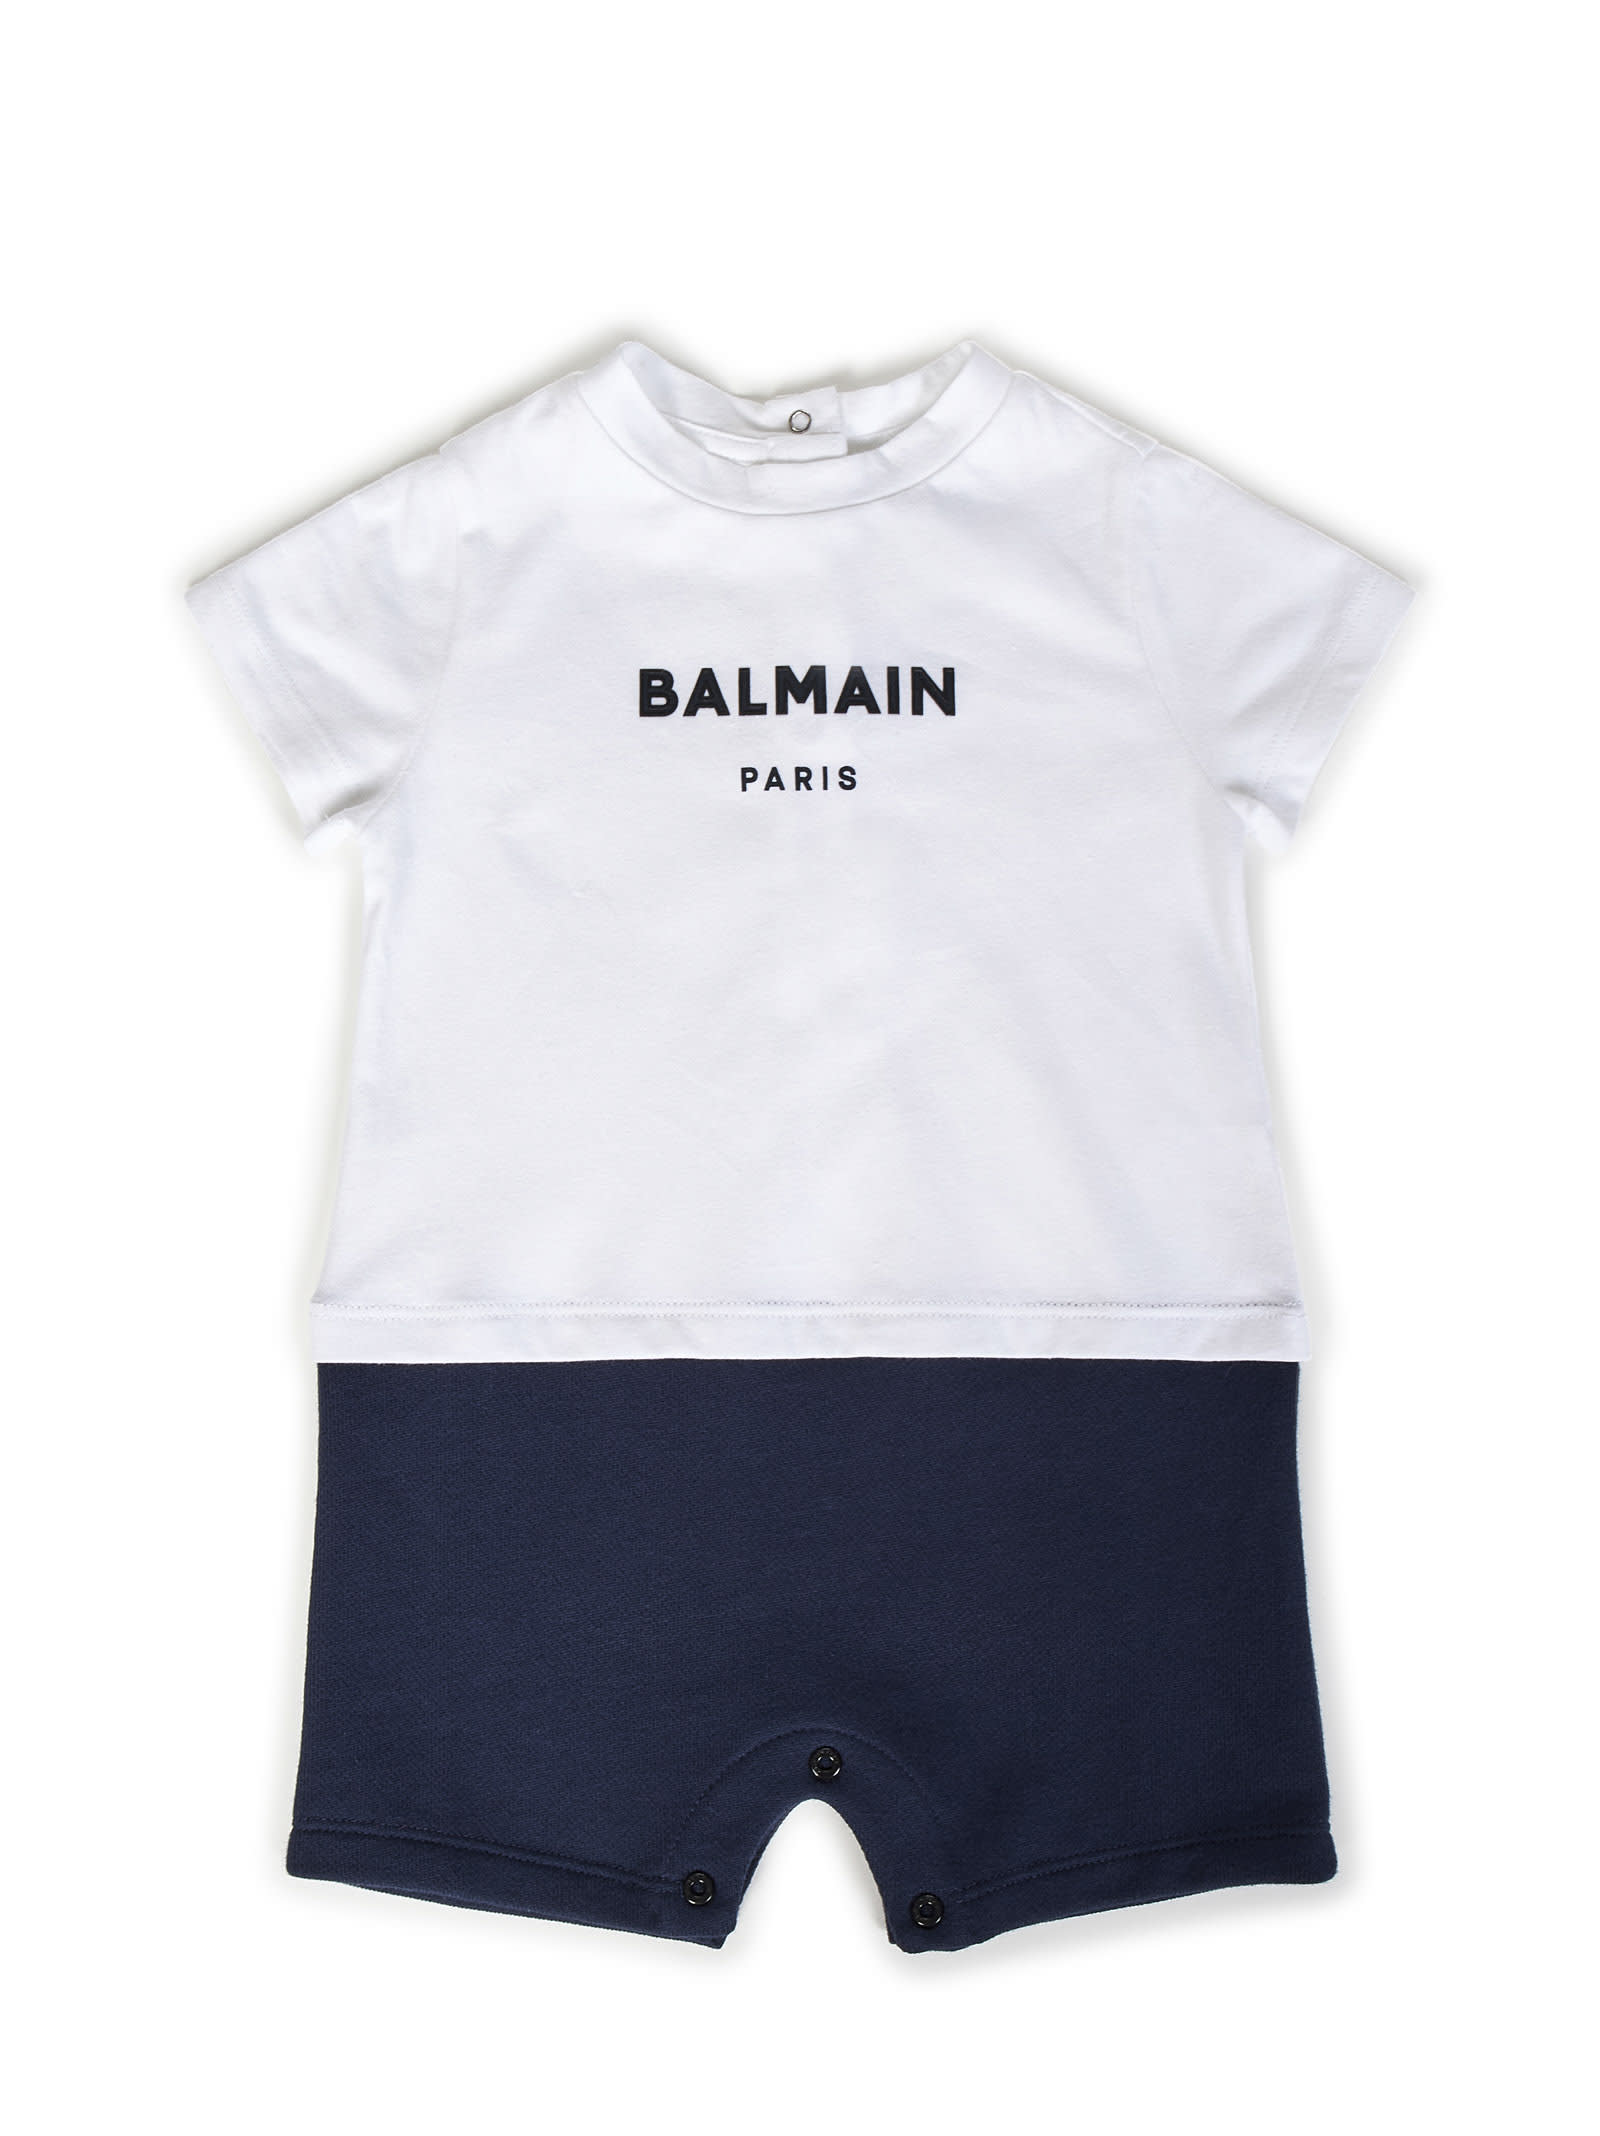 Balmain Babies' Romper In White